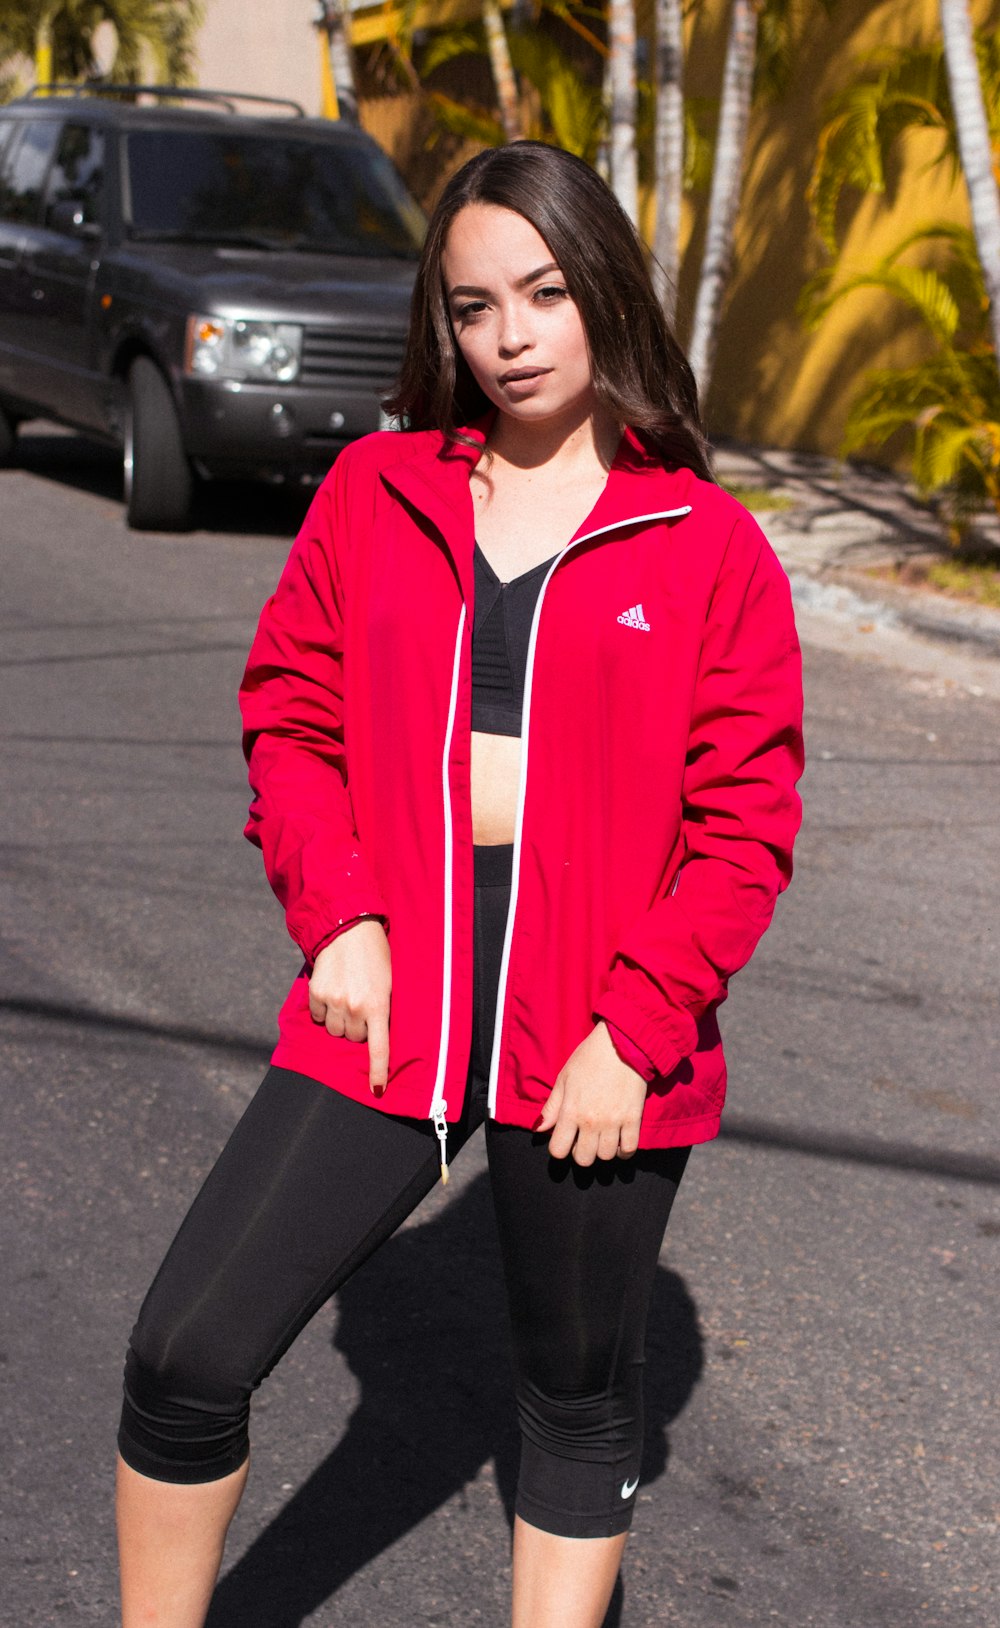 woman wearing red Adidas zip-up jacket and black leggings photo – Free  Jacket Image on Unsplash